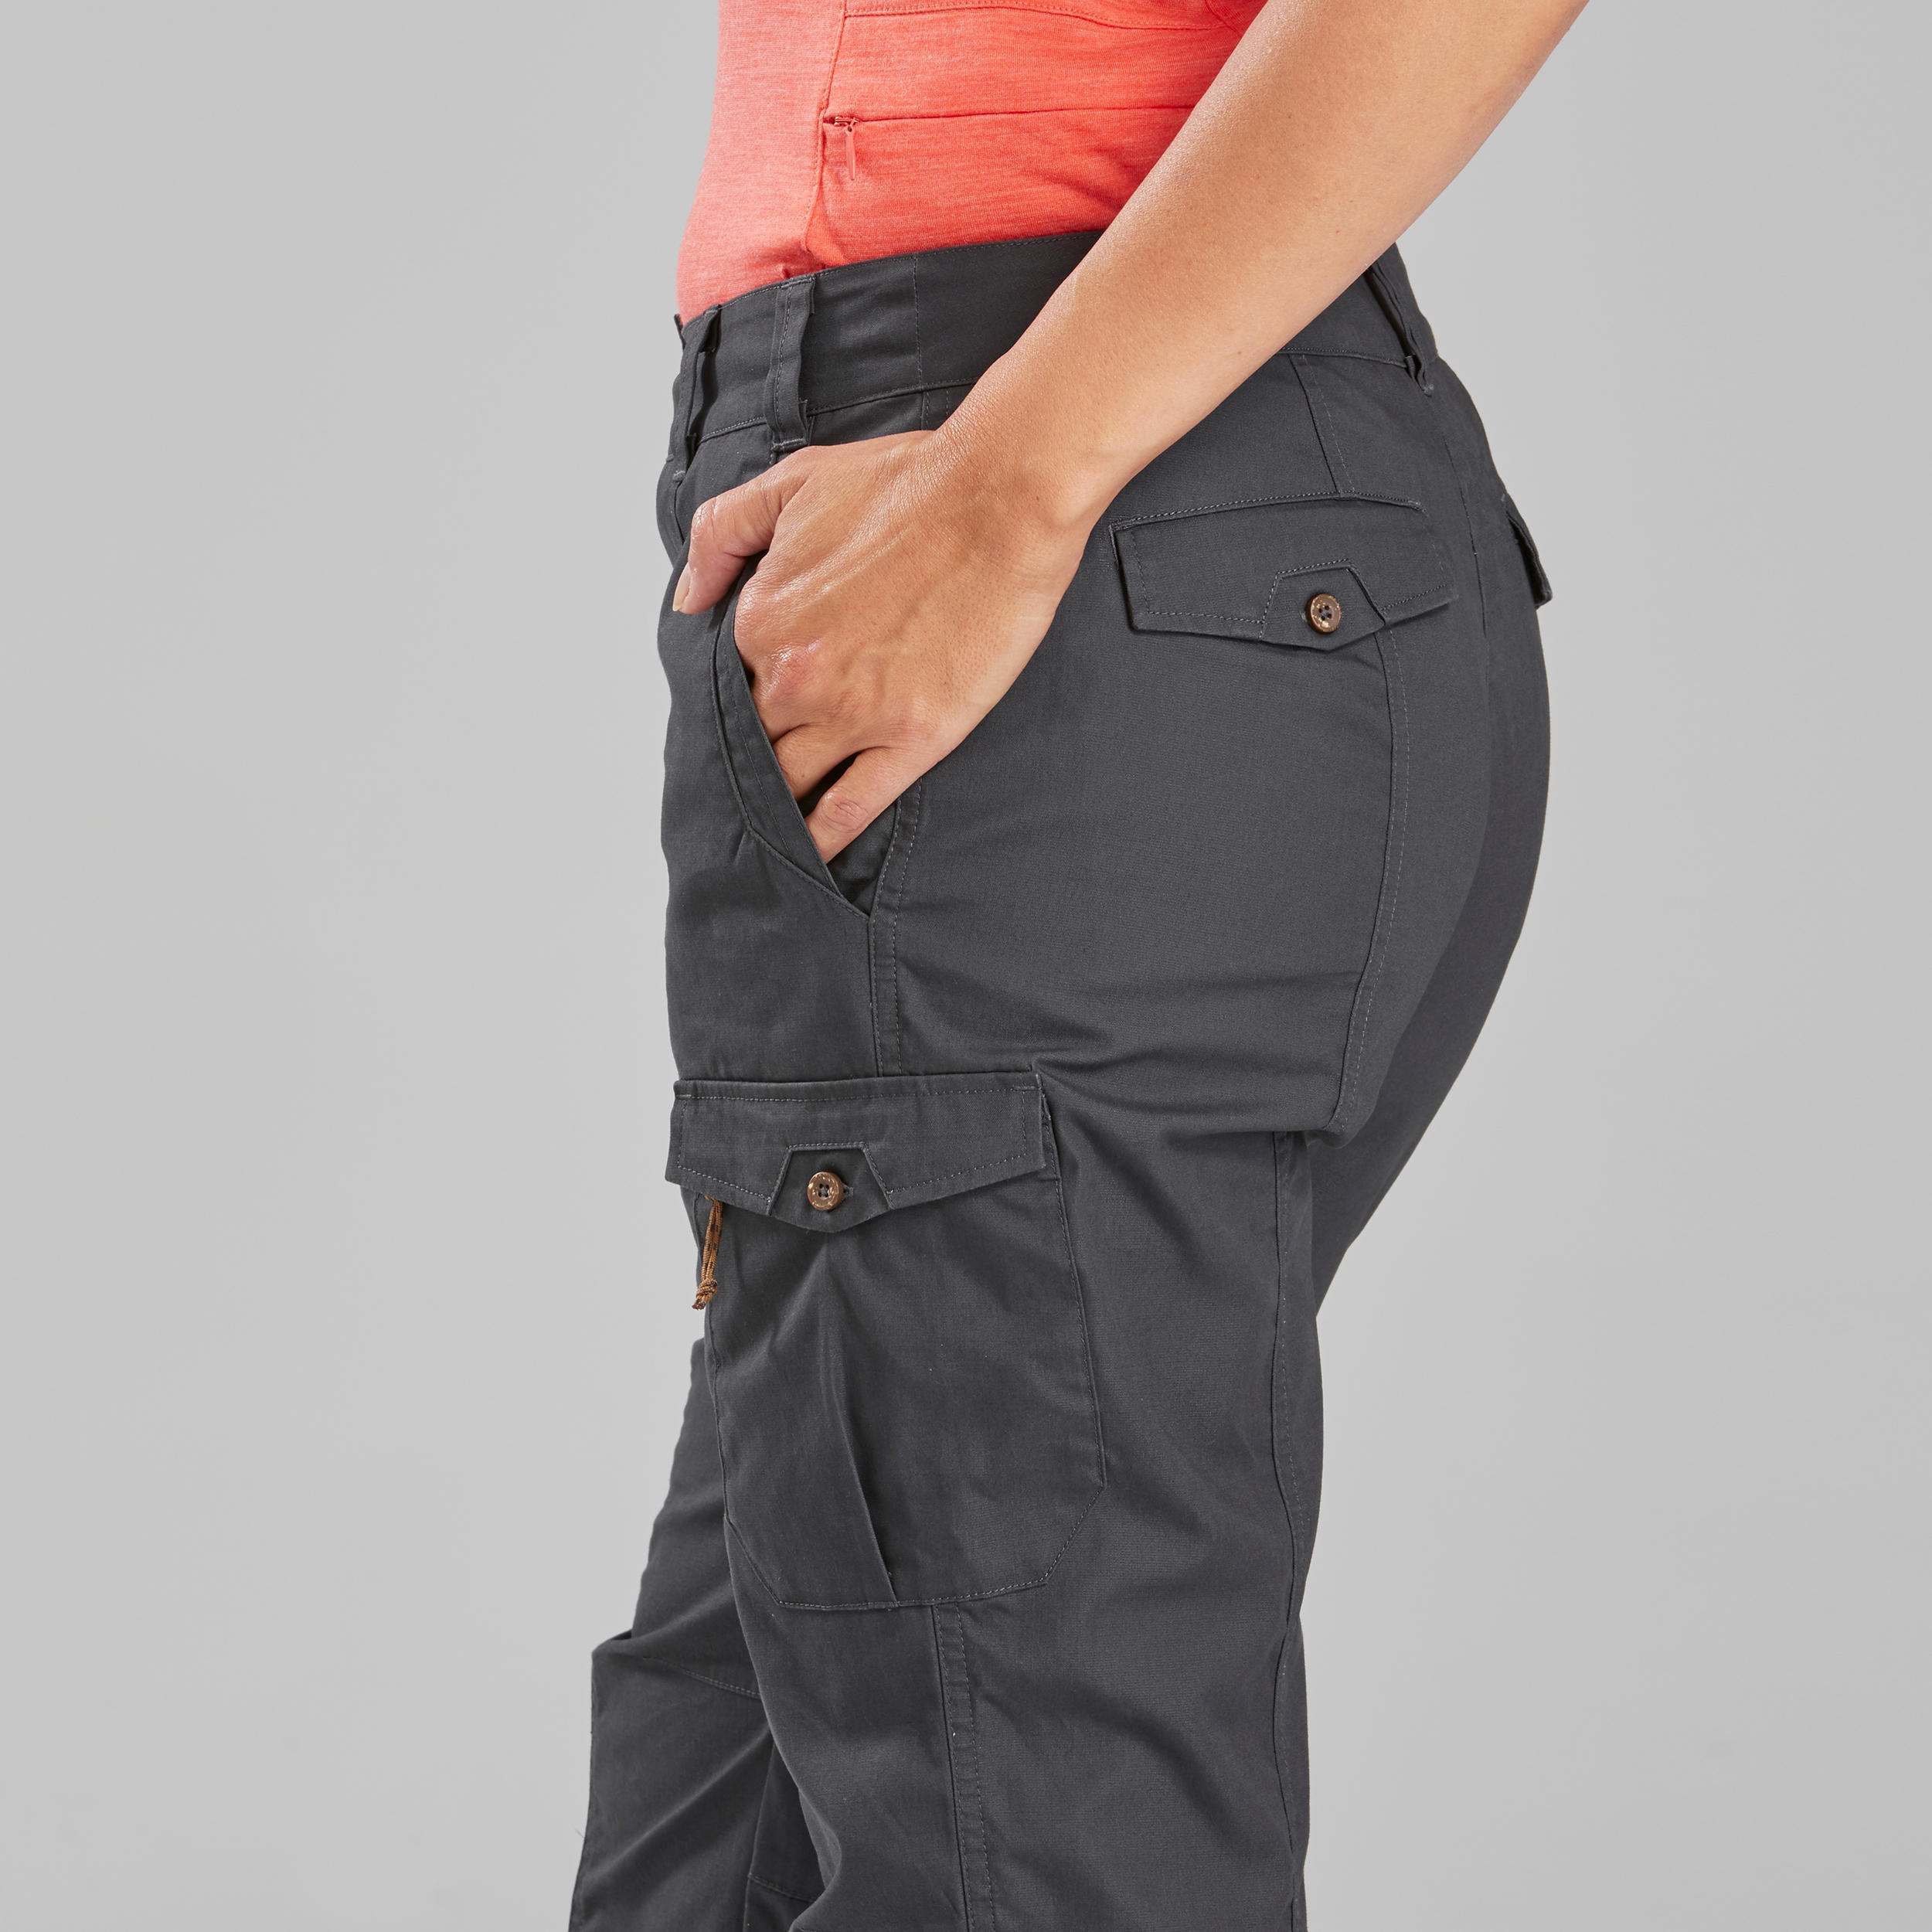 Discover 161+ decathlon mens trousers latest - camera.edu.vn